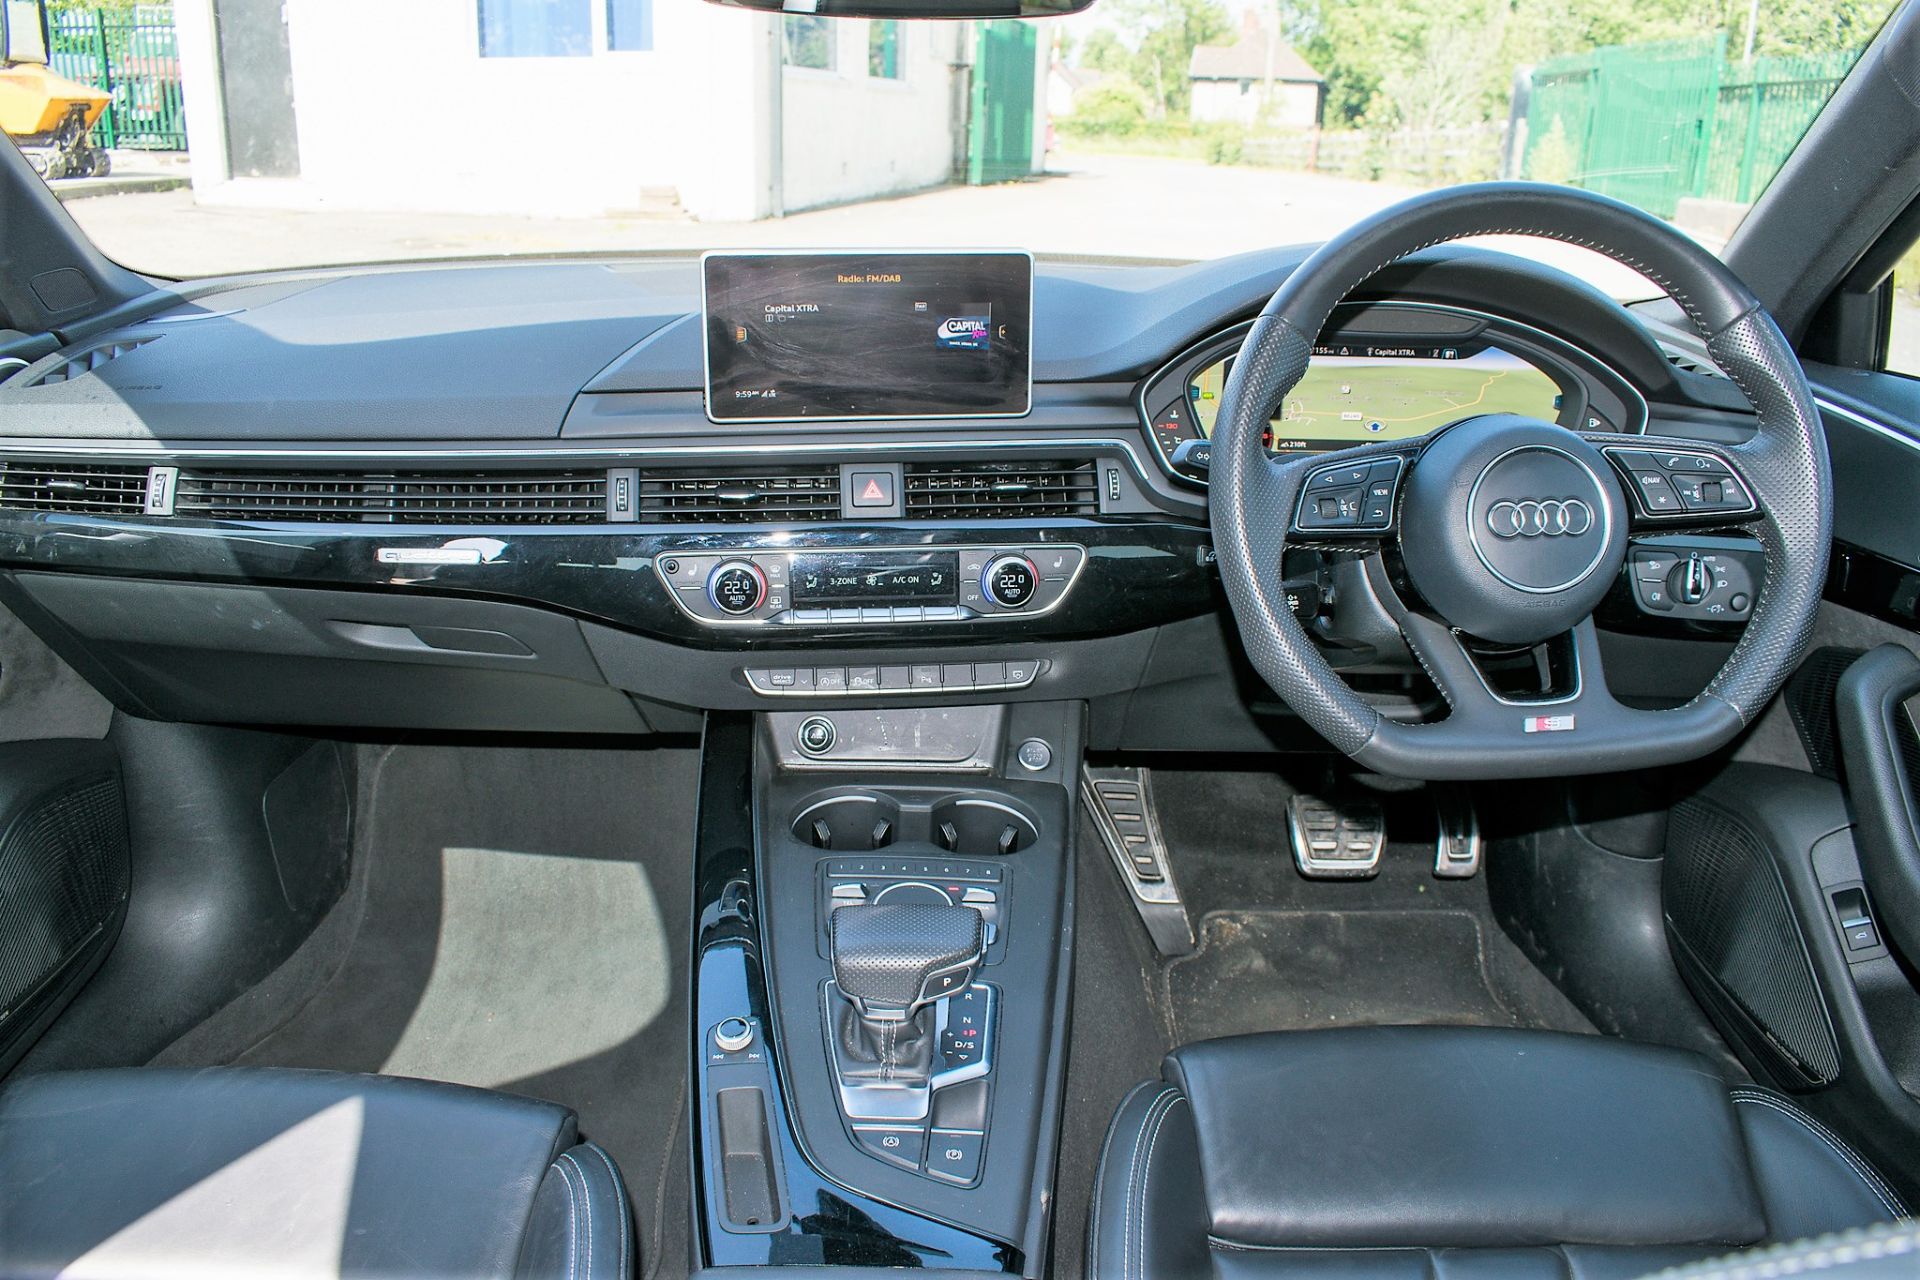 Audi A4 S-Line TDI Quattro 4 door saloon car Registration Number: LT67 XXF Date of Registration: - Image 19 of 20